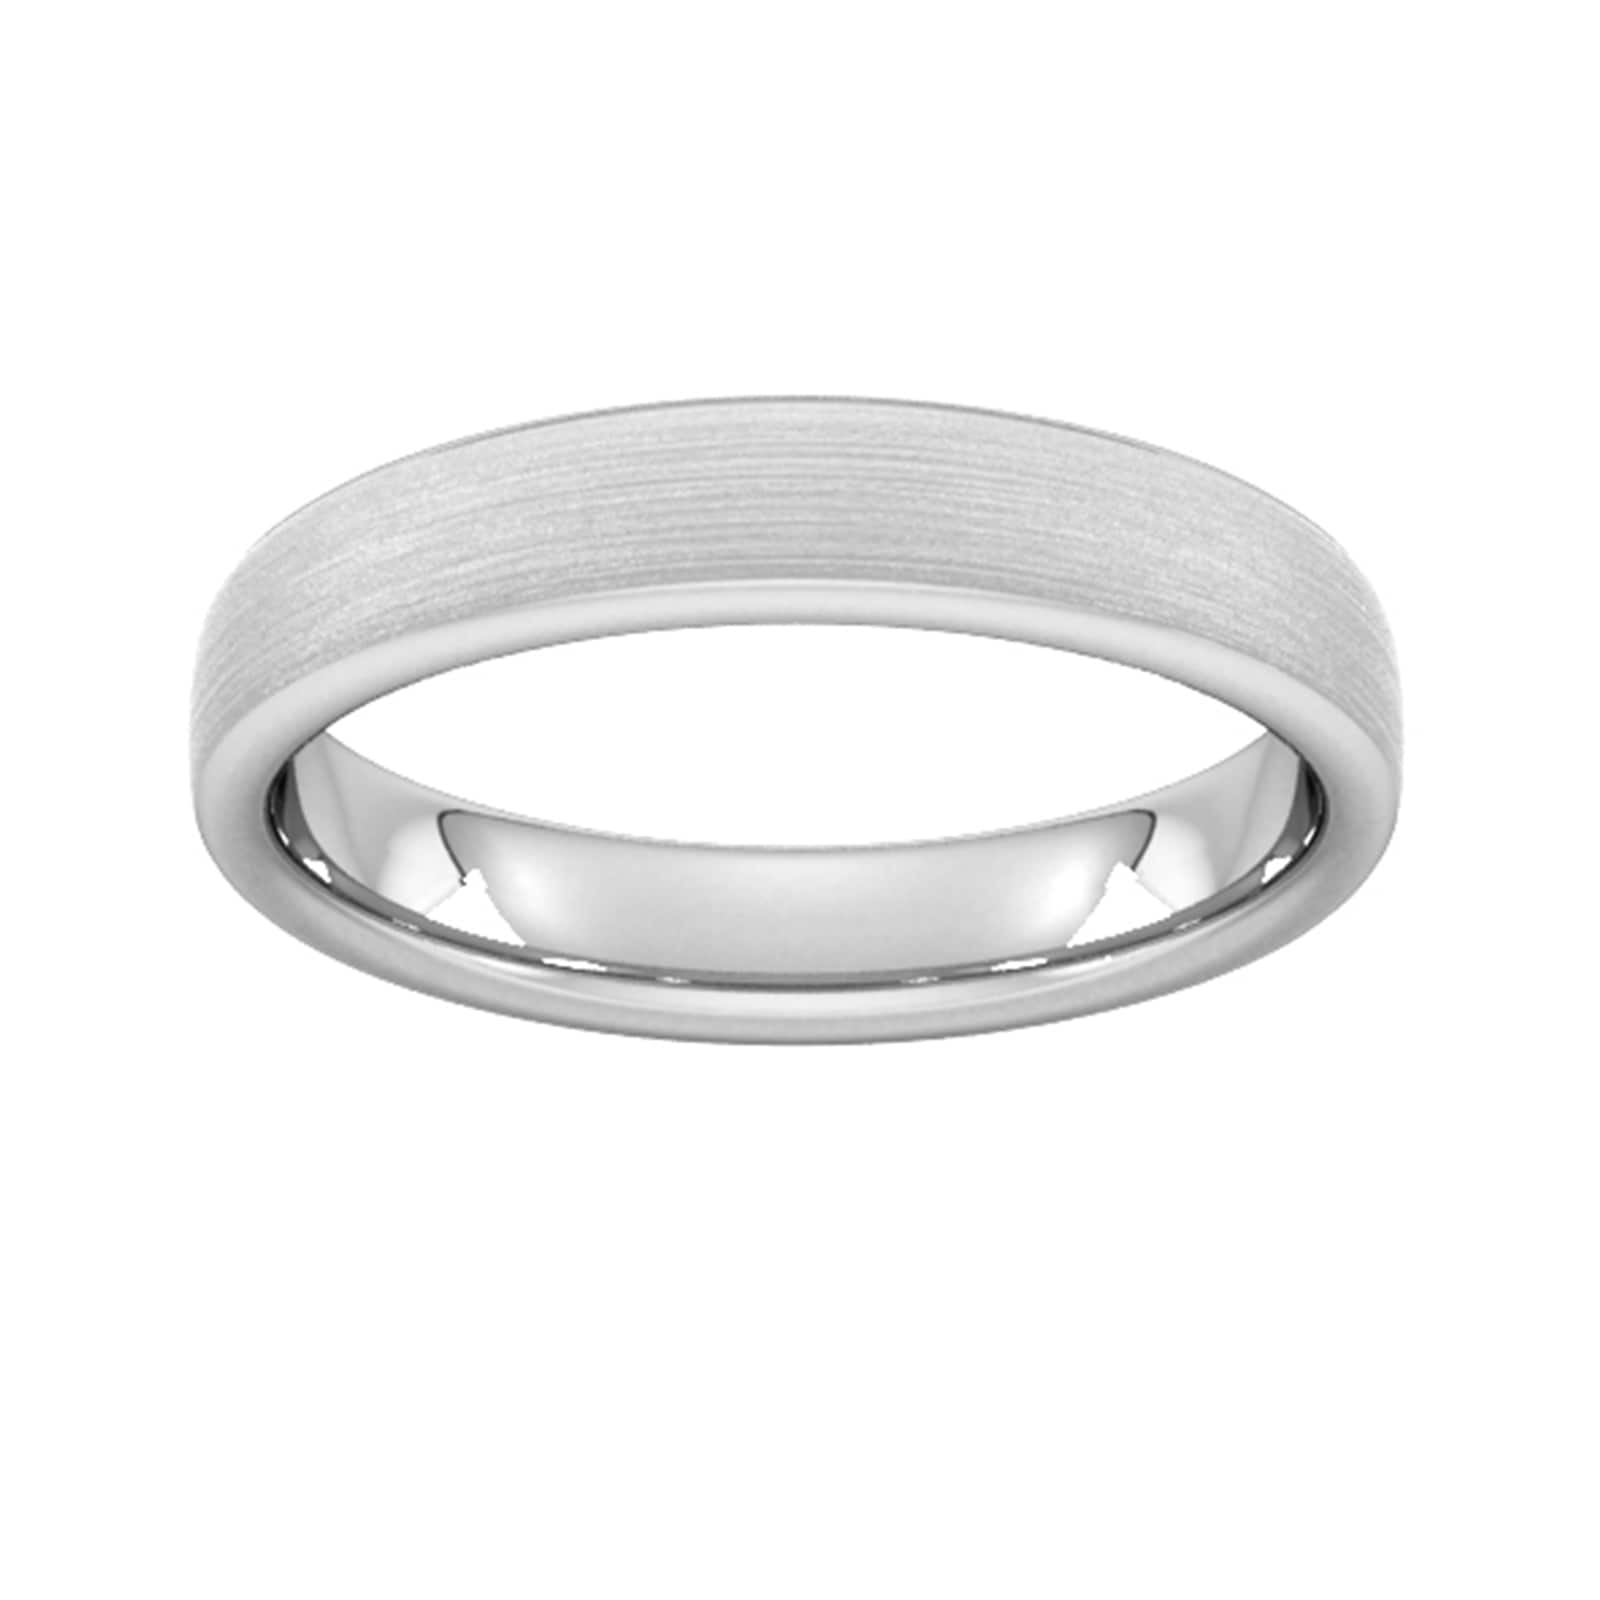 4mm Slight Court Standard Matt Finished Wedding Ring In 18 Carat White Gold - Ring Size O